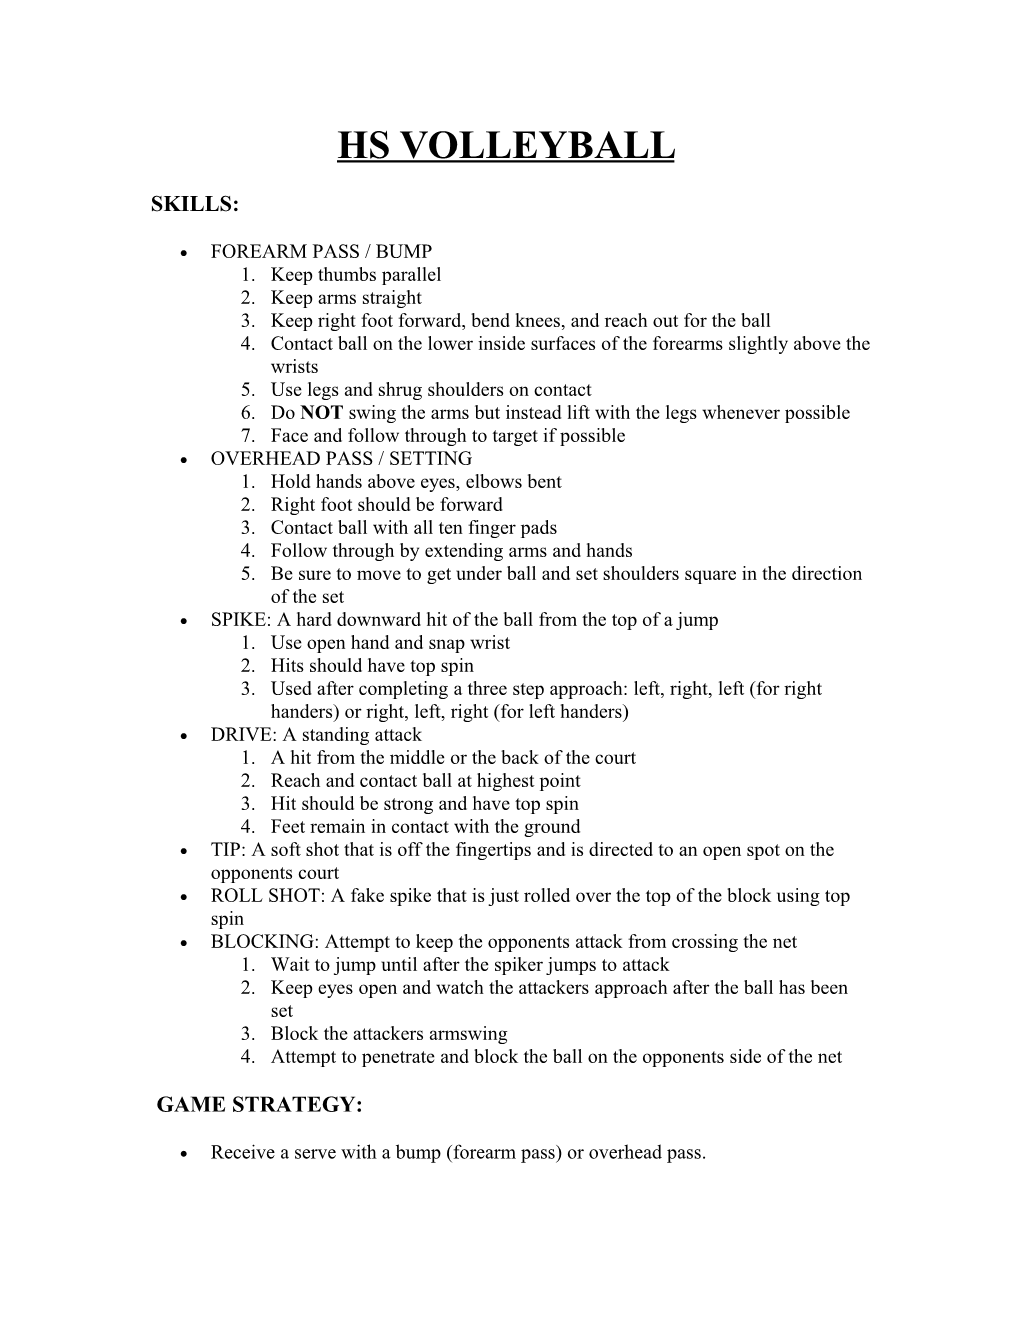 Basketball Study Guide